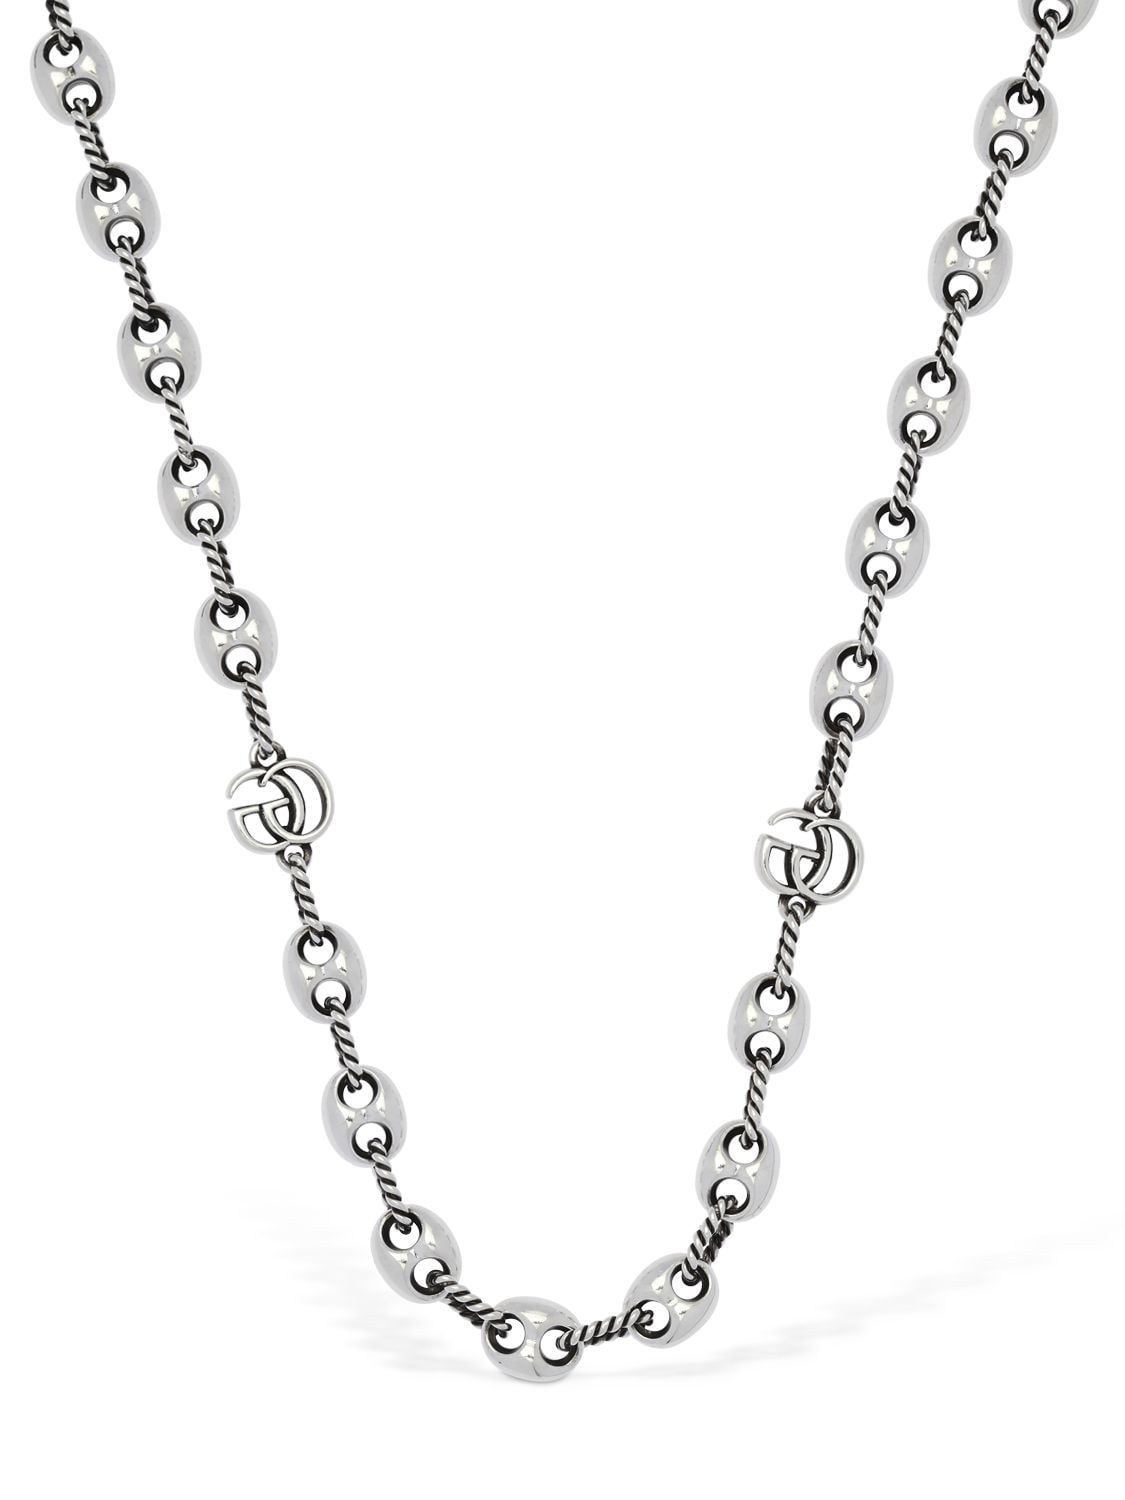 Gucci 45cm Gg Marmont Necklace W/ Marina Chain In Silver